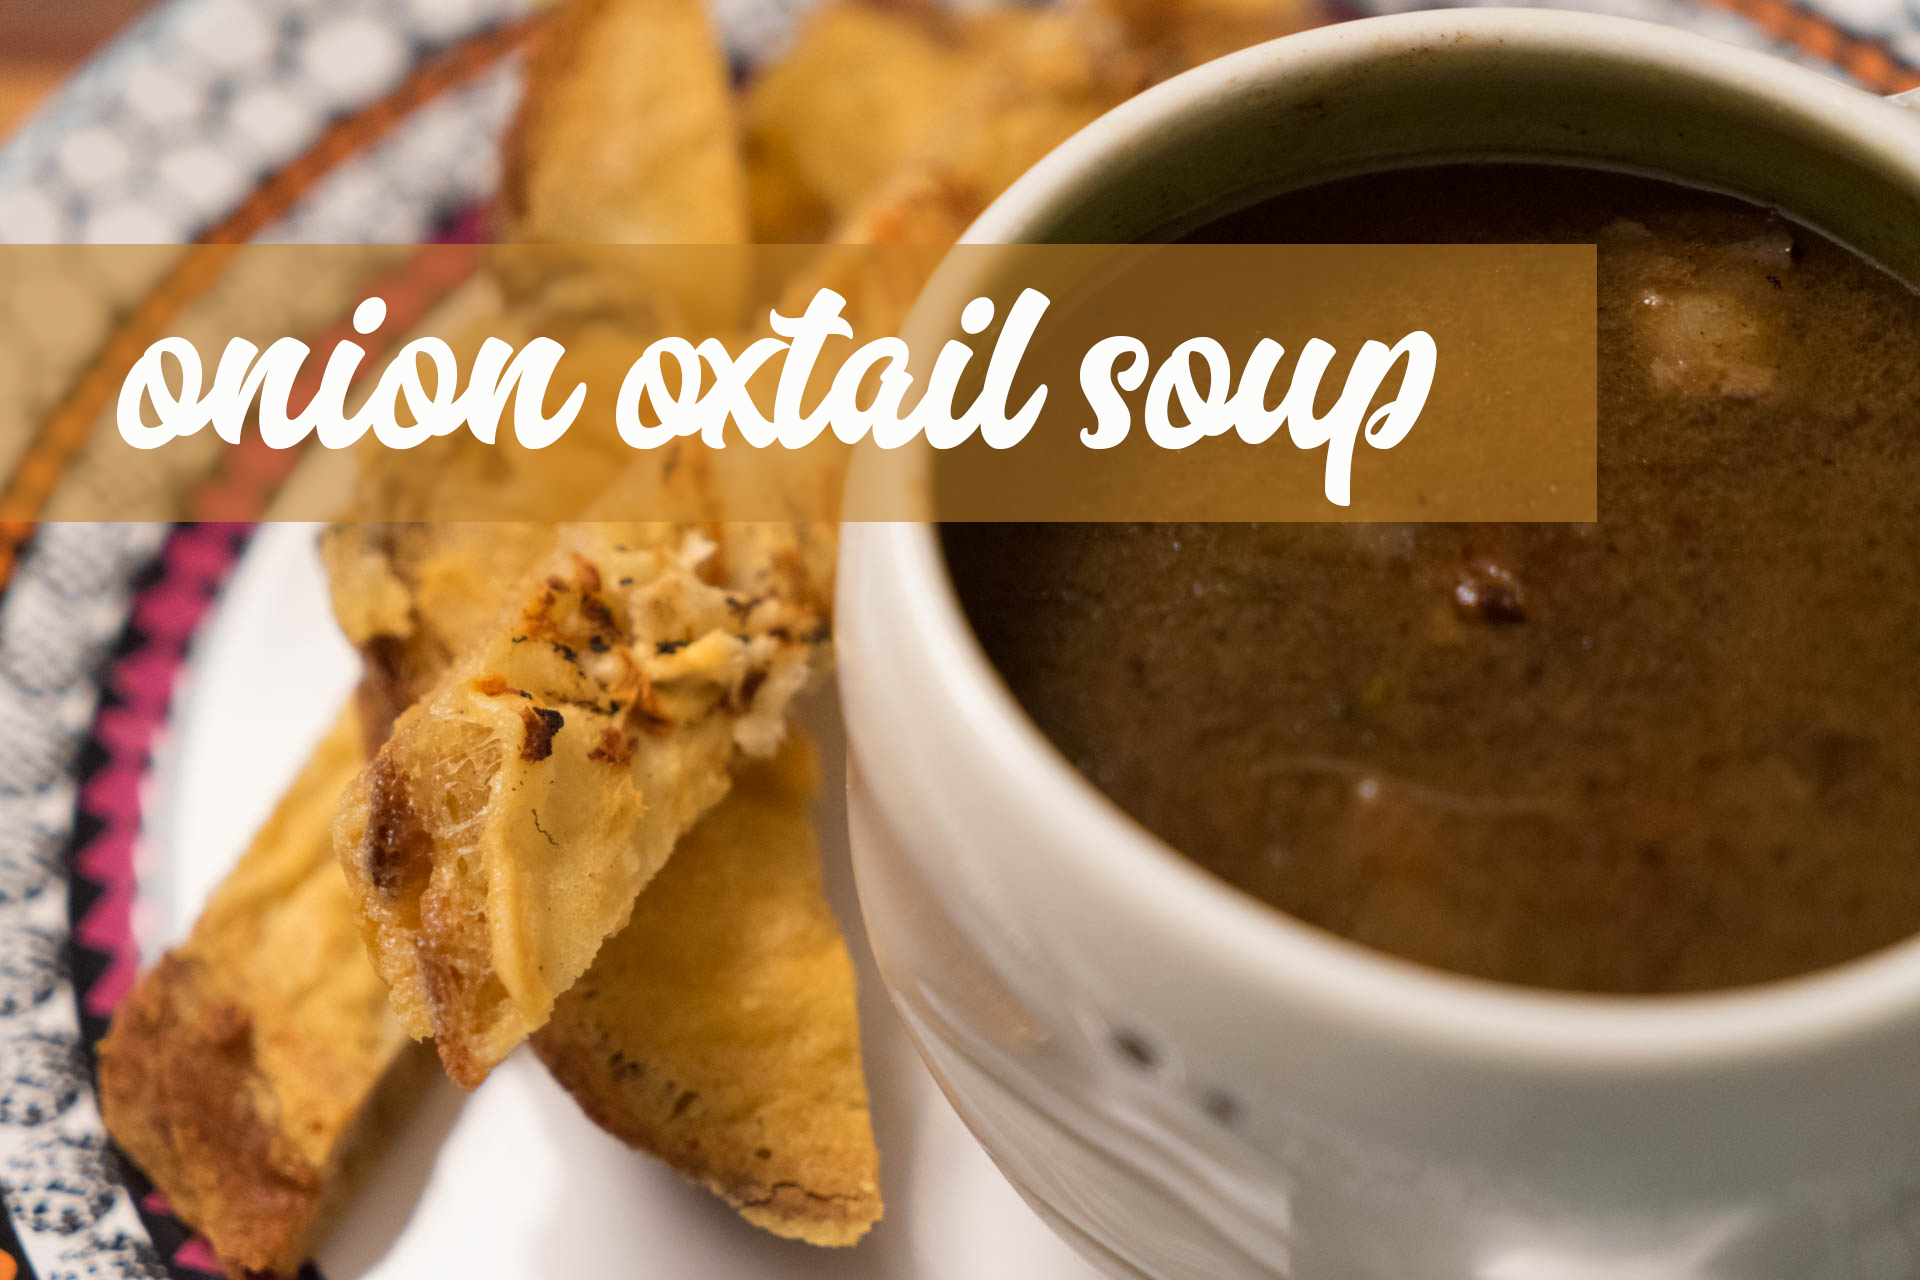 Onion Oxtail Soup